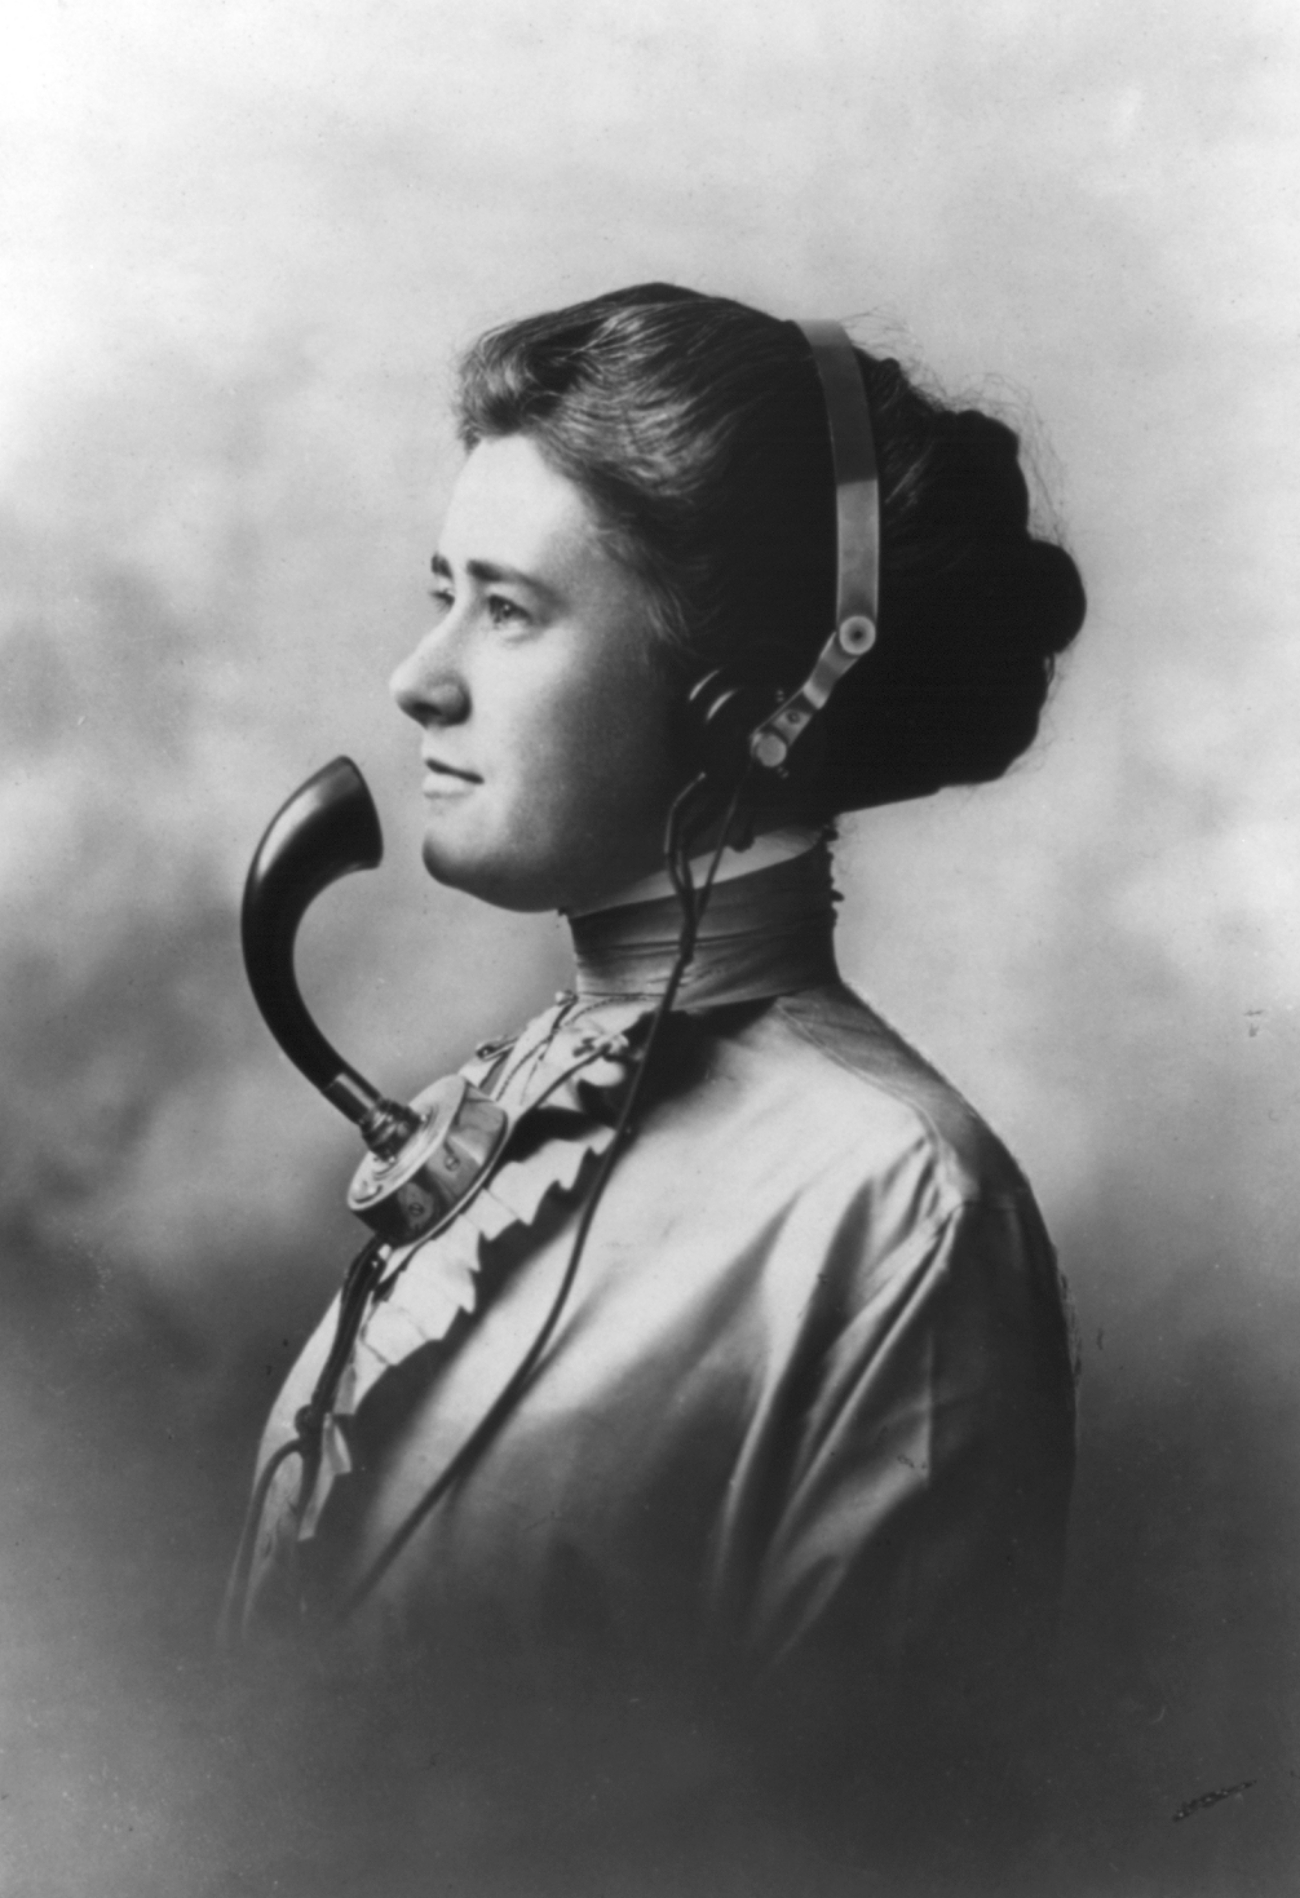 1911 telephone operator